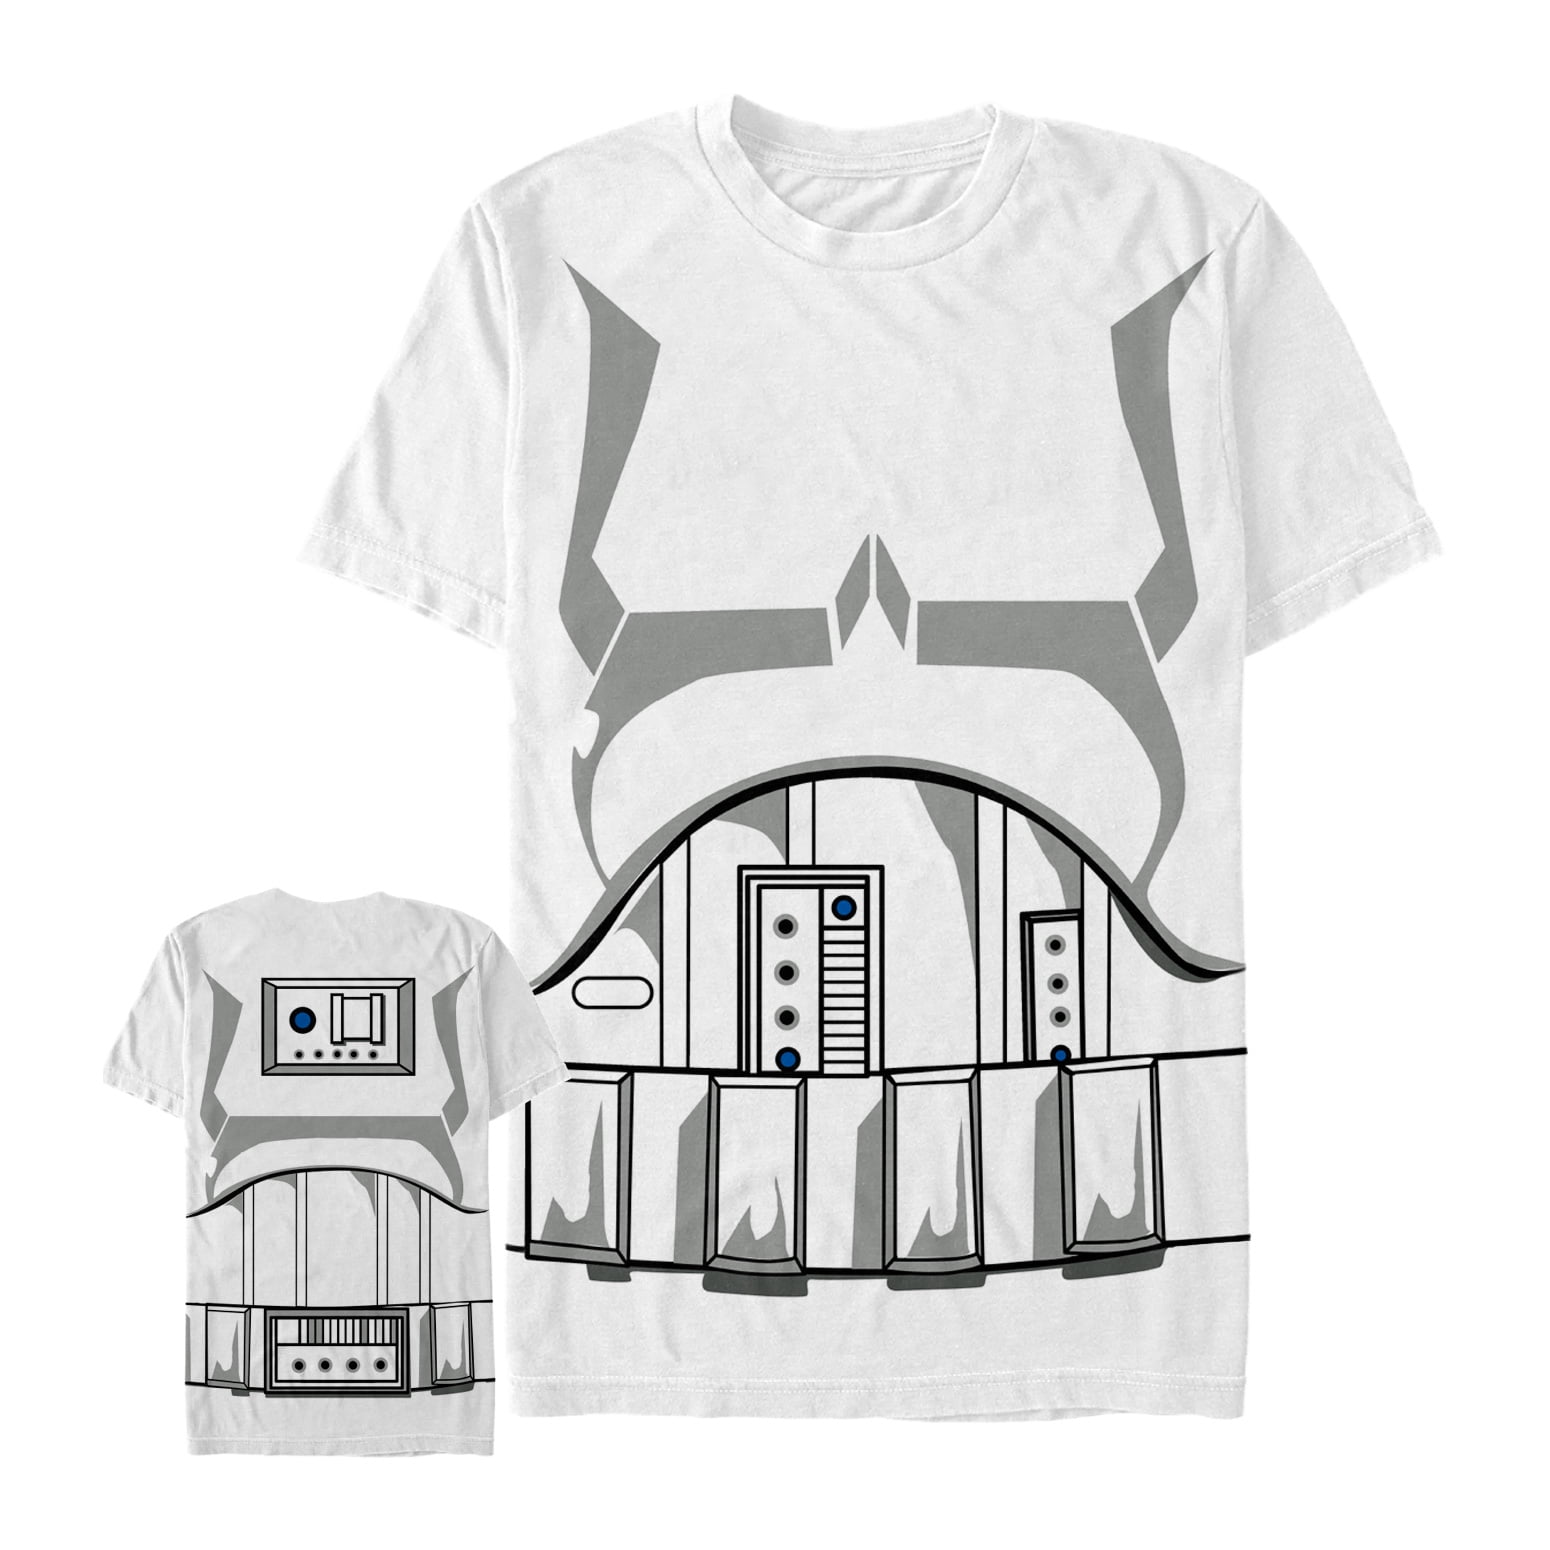 stormtrooper costume t shirt